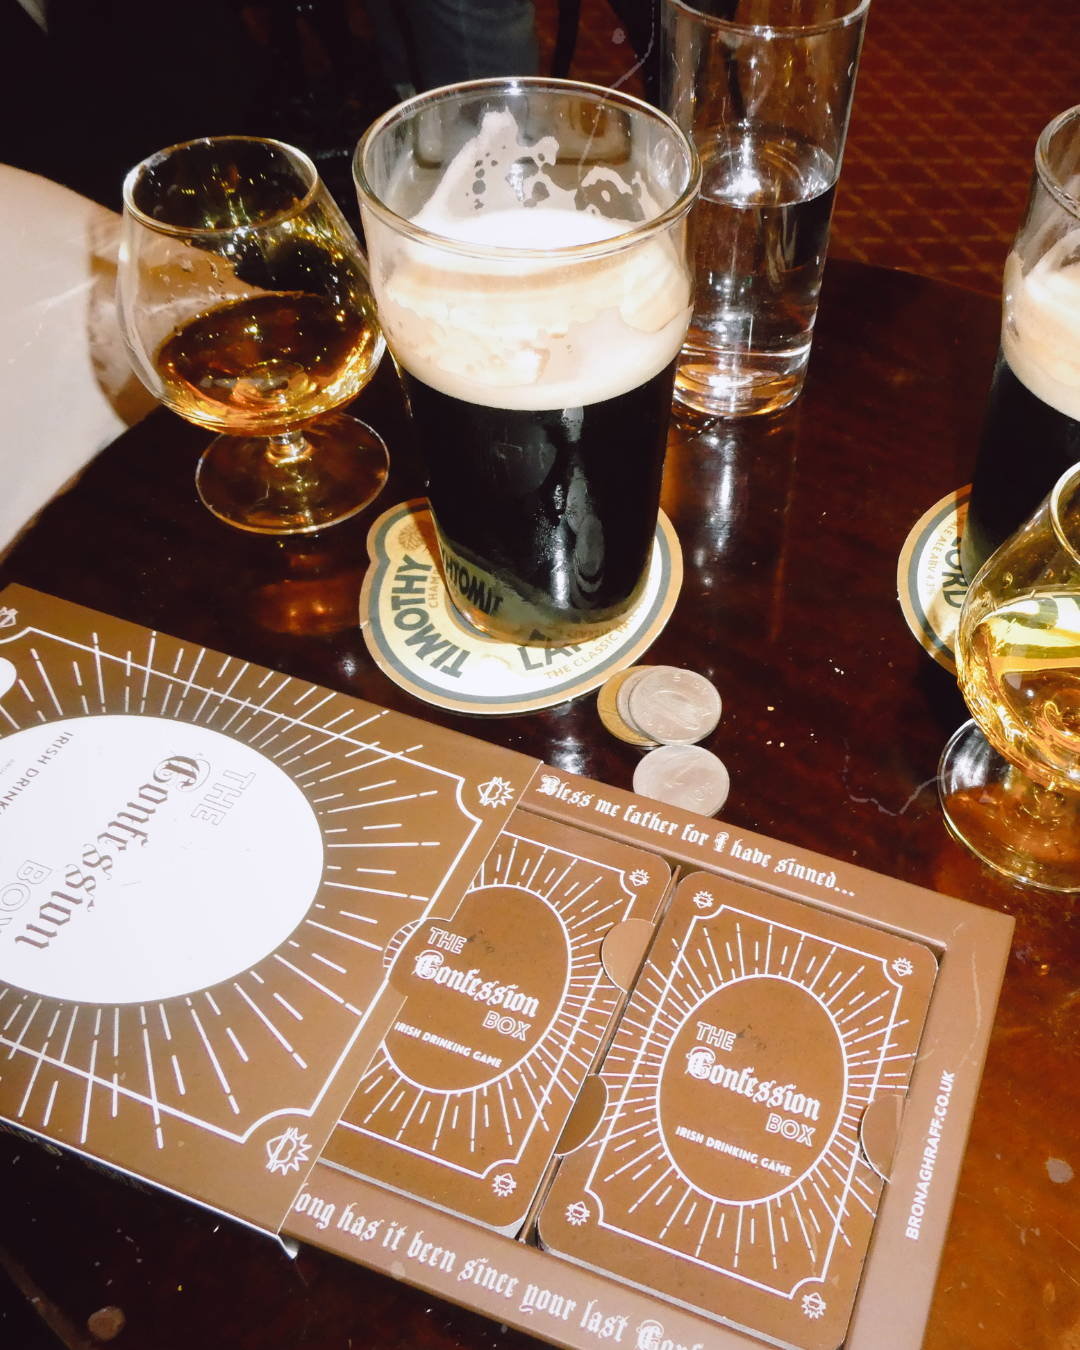 The Confession Box Irish Drinking Card Game